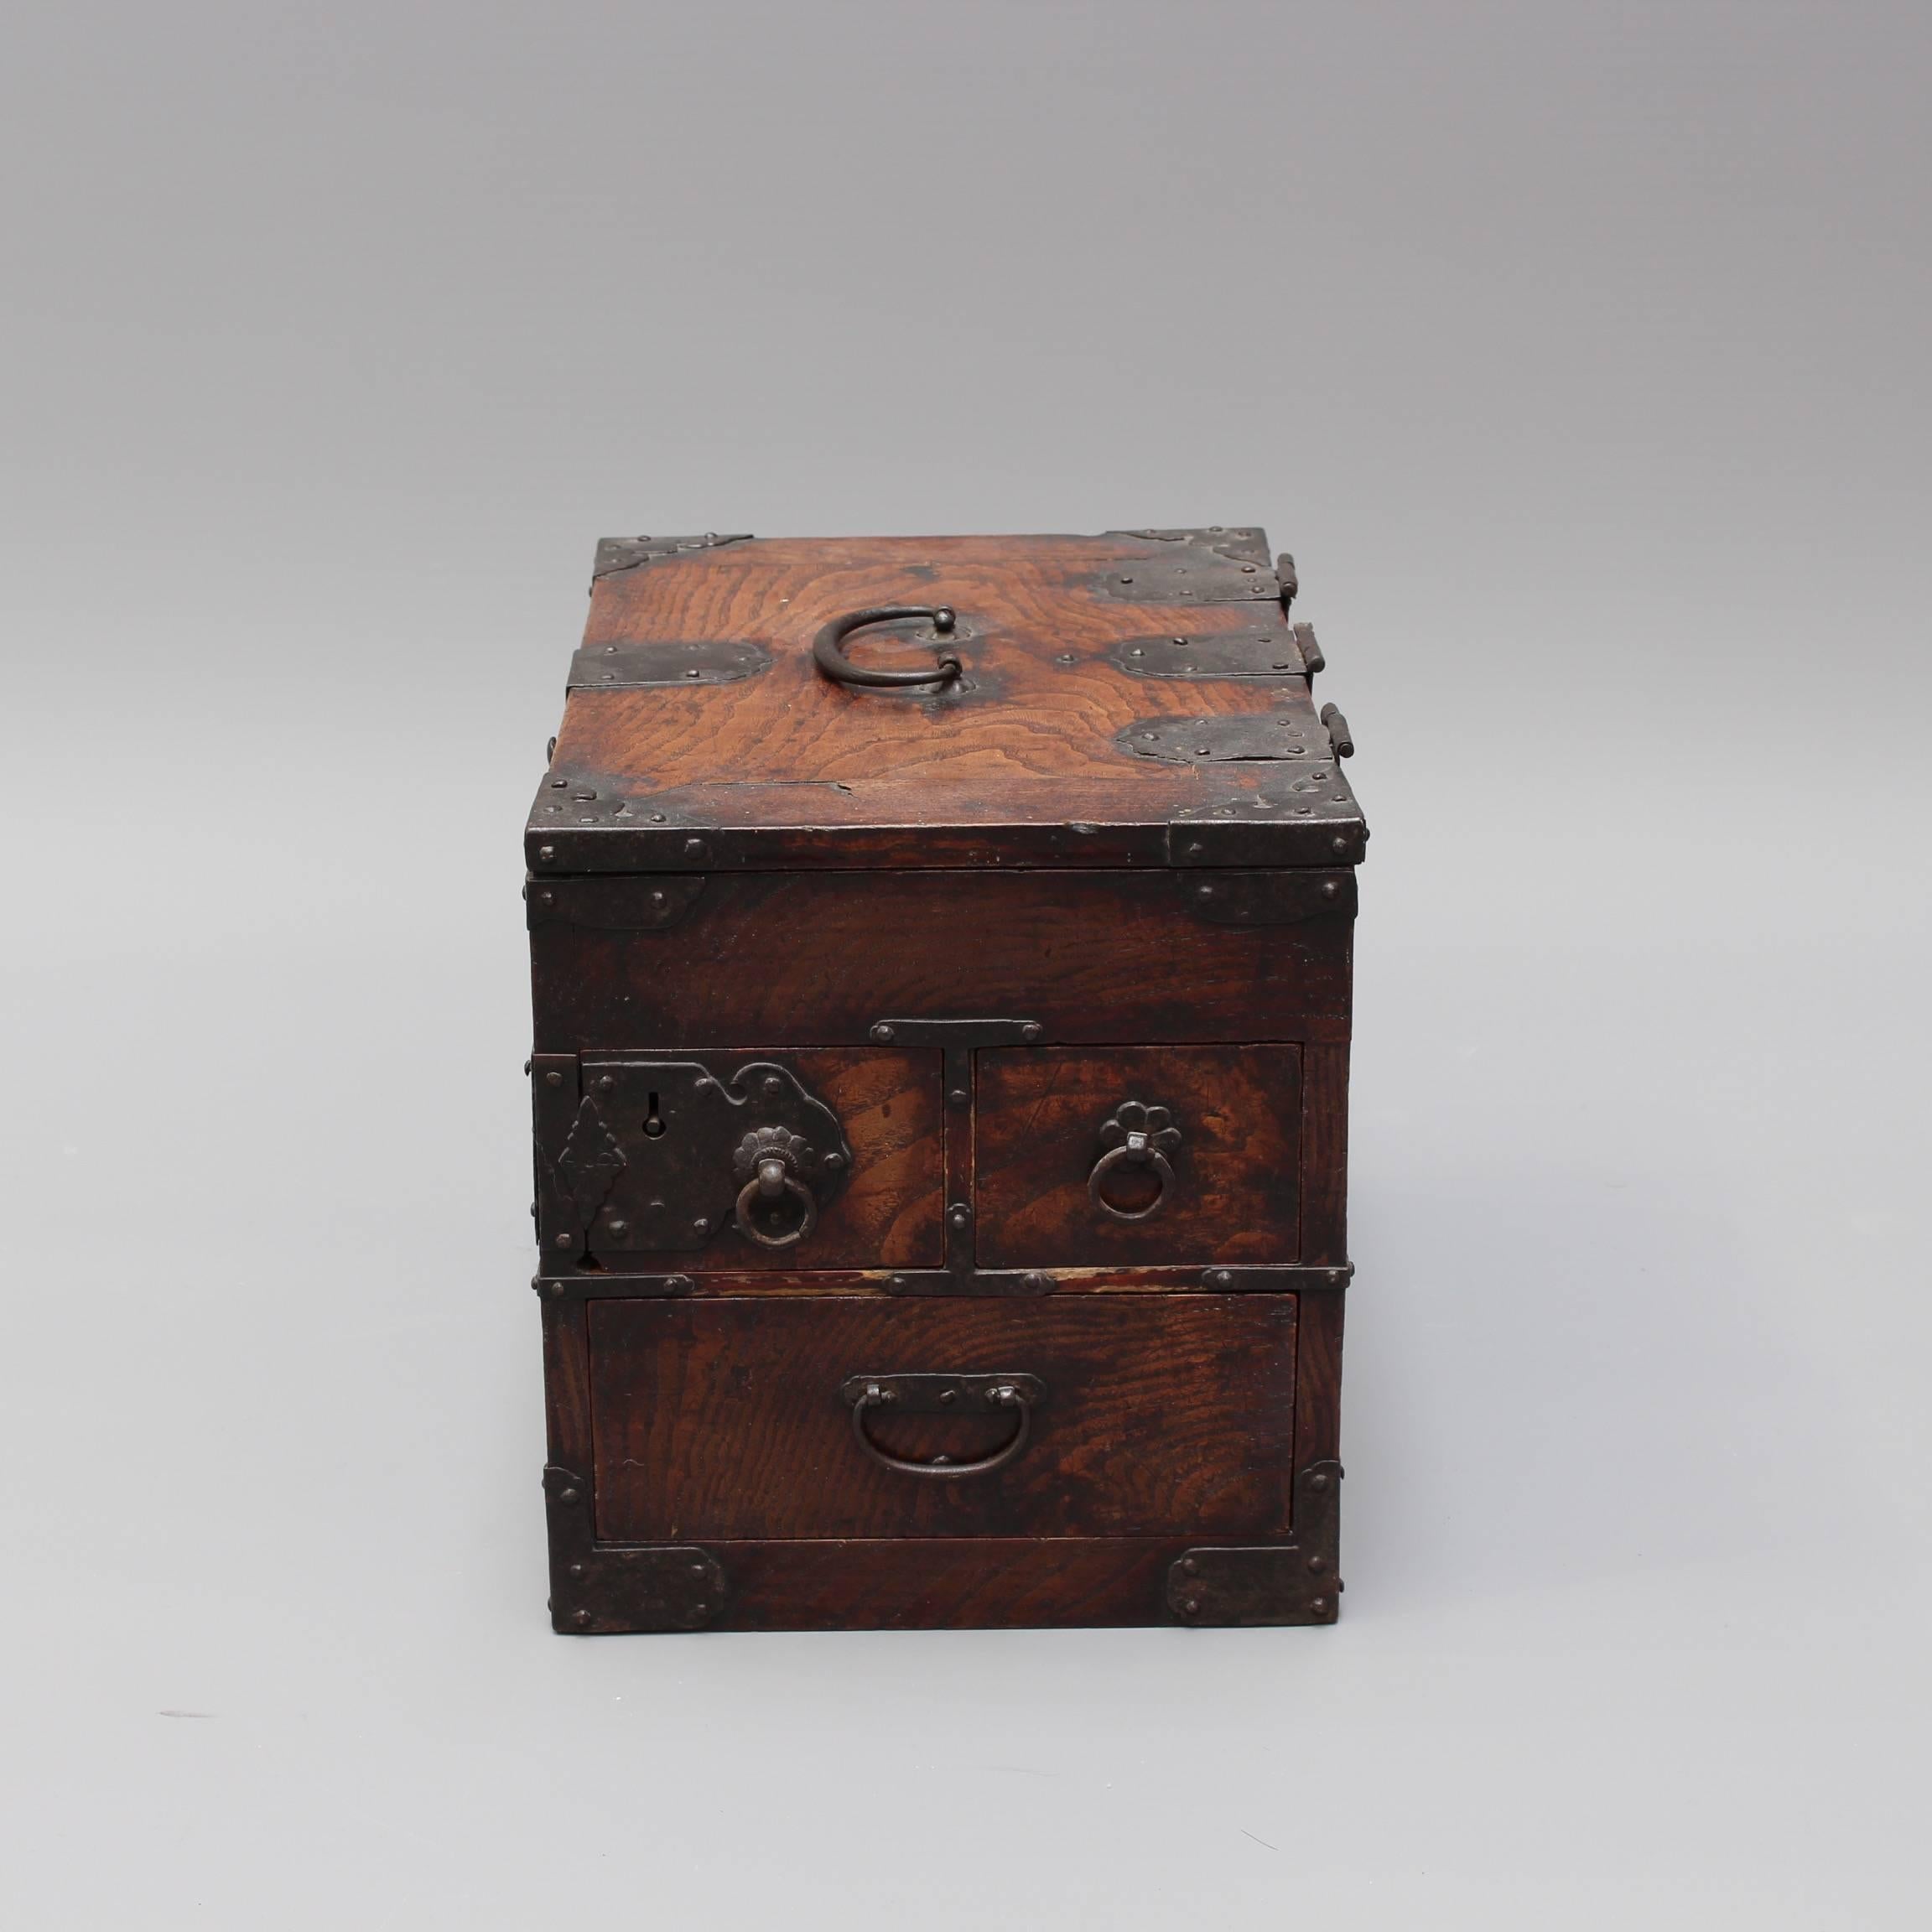 Metal Antique Japanese Wooden Writing Box with Decorative Hardware 'Meiji Era'